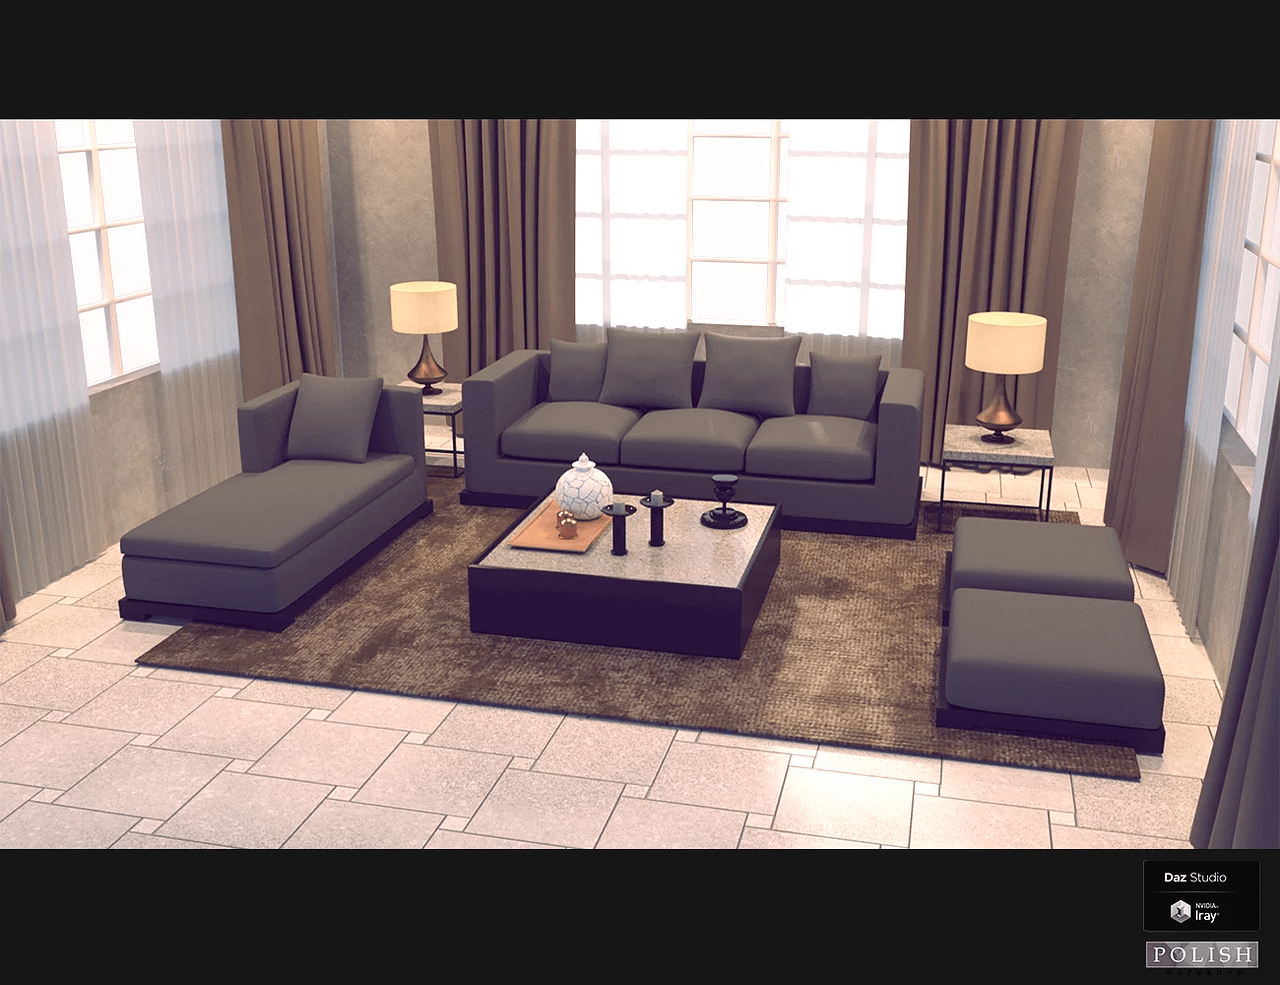 daz interior furniture bundle